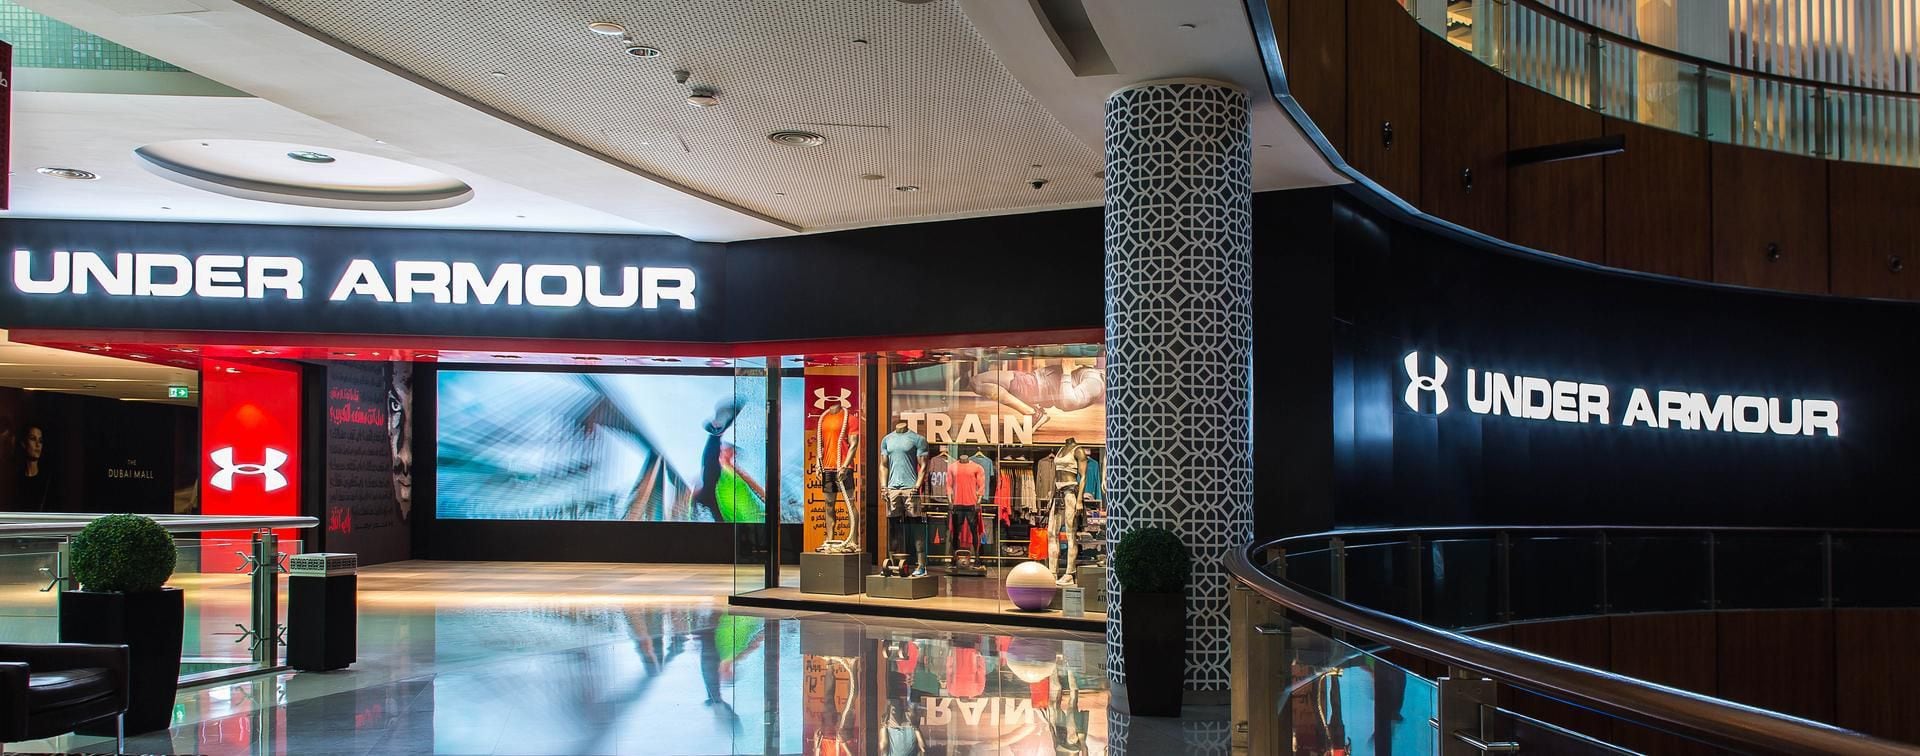 Under Armour Launches Flagship Store In Dubai Mall Village Retail Focus ...